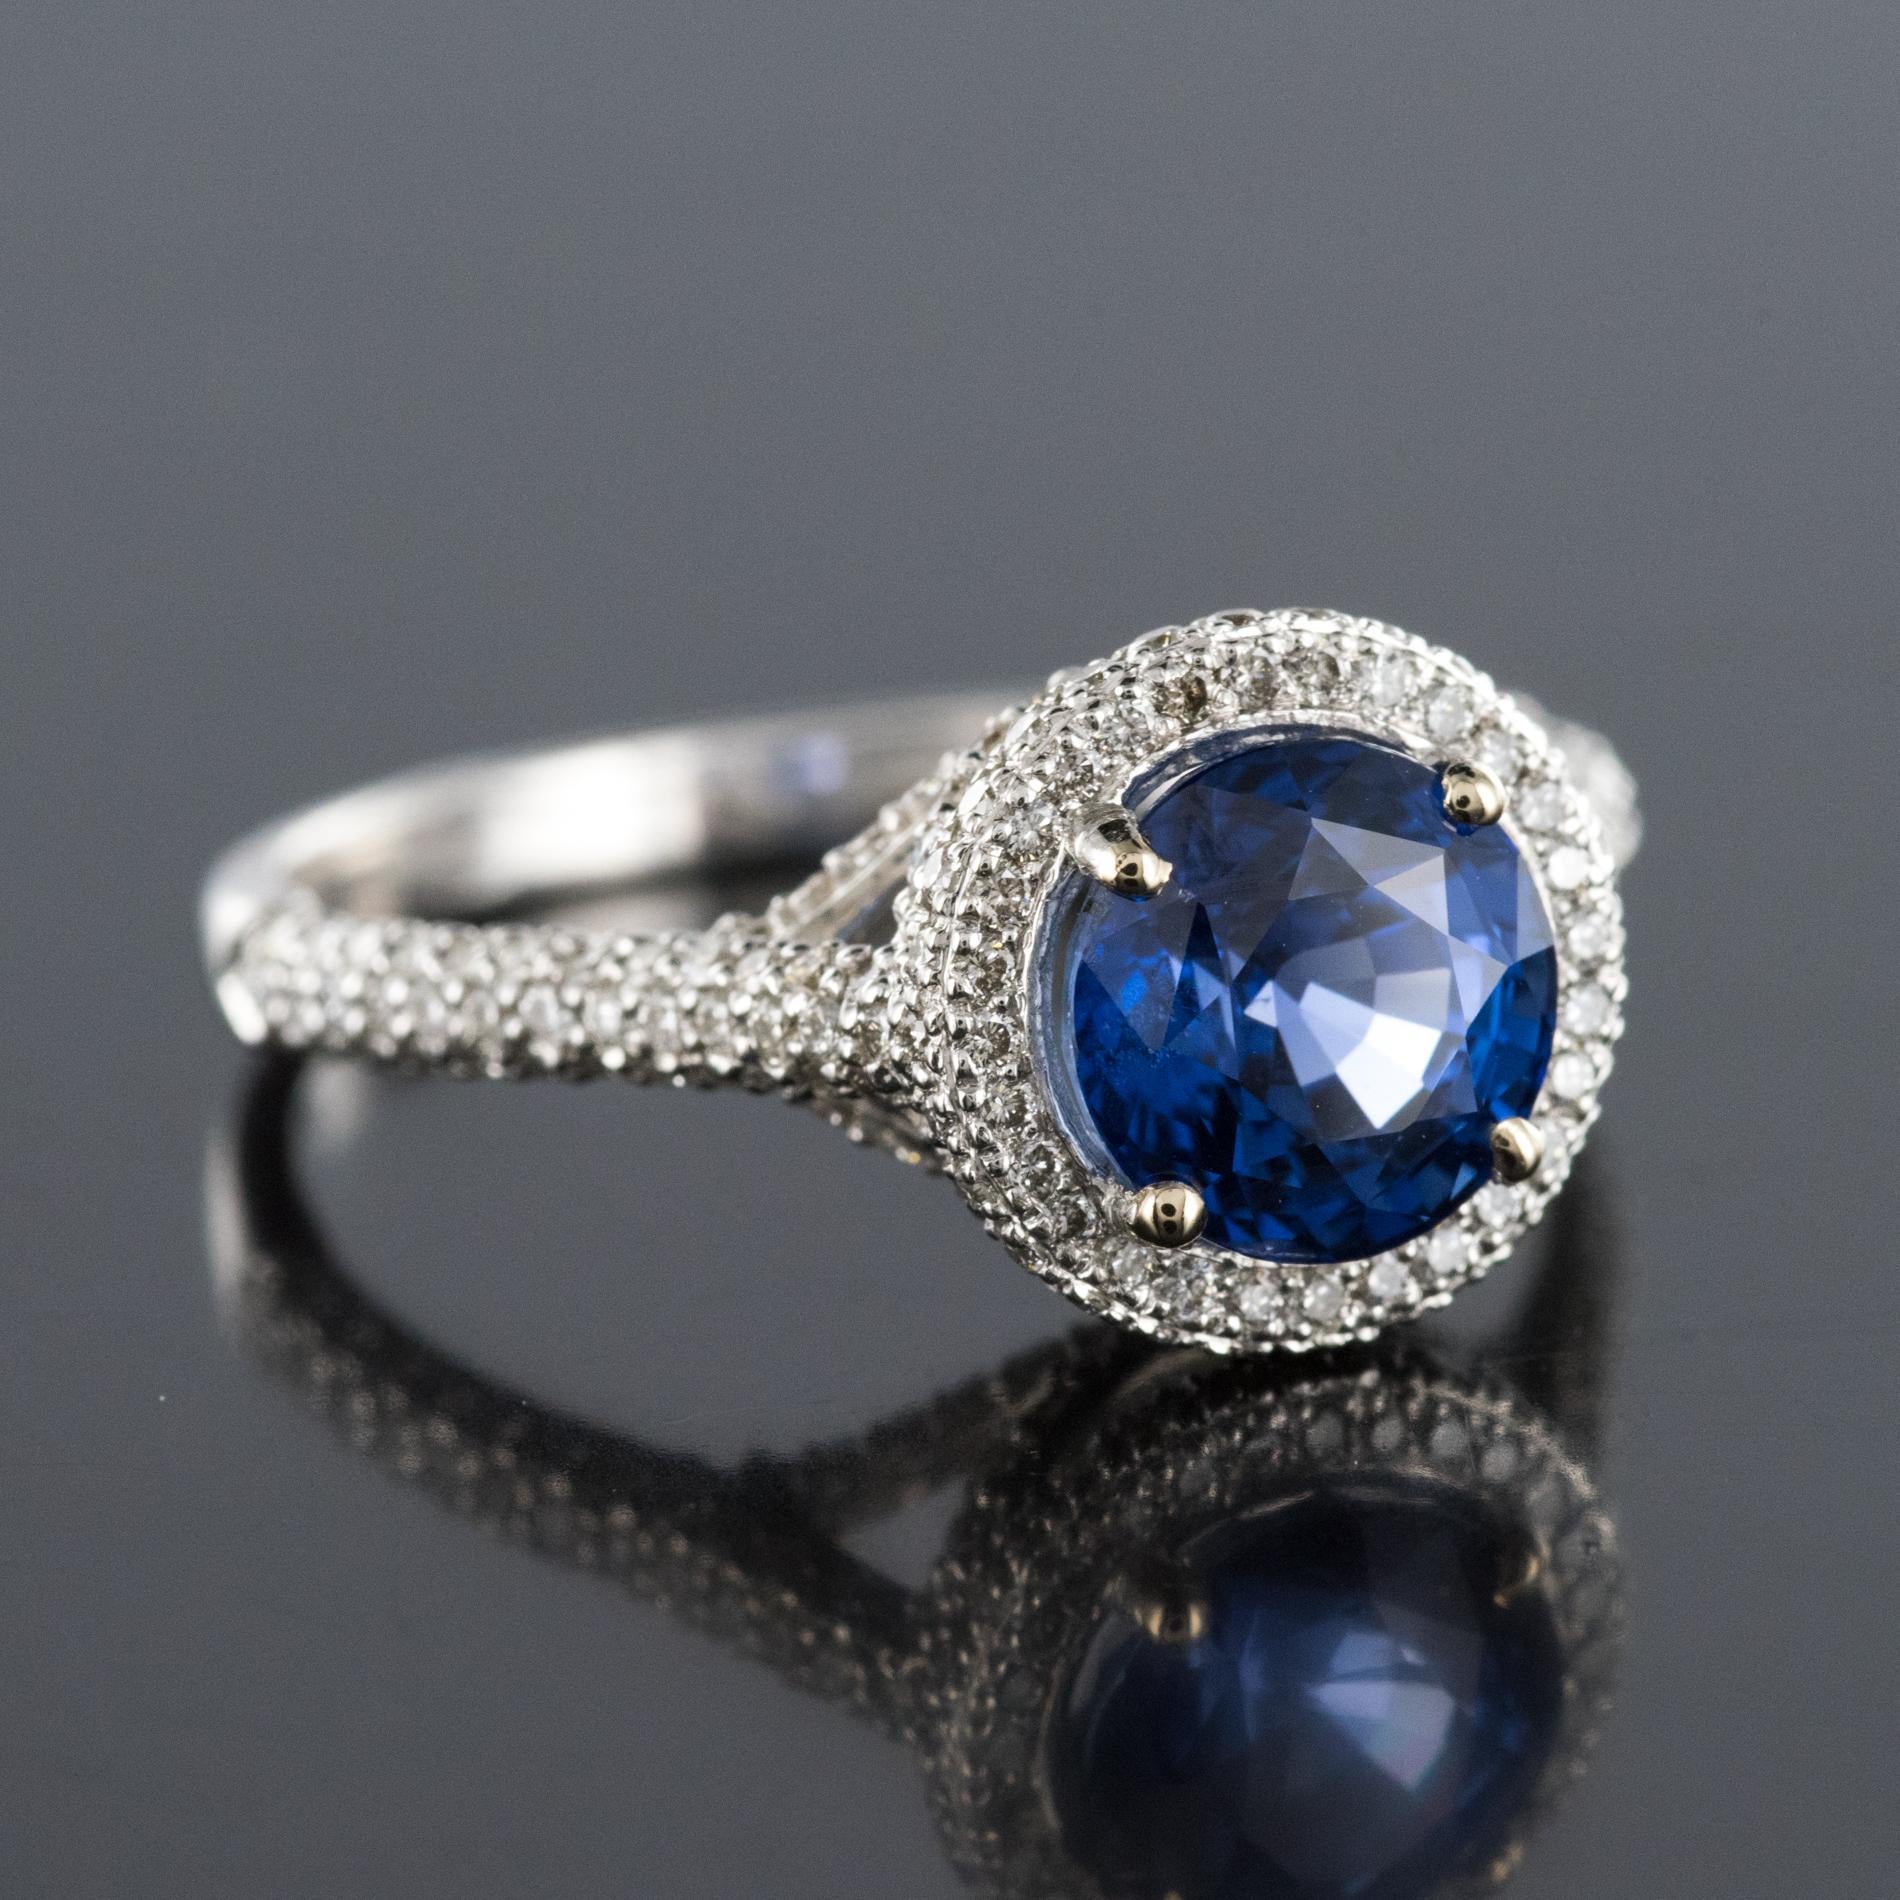 French 2.26 Carat Royal Blue Sri Lanka Certified Sapphire Diamonds Ring For Sale 1